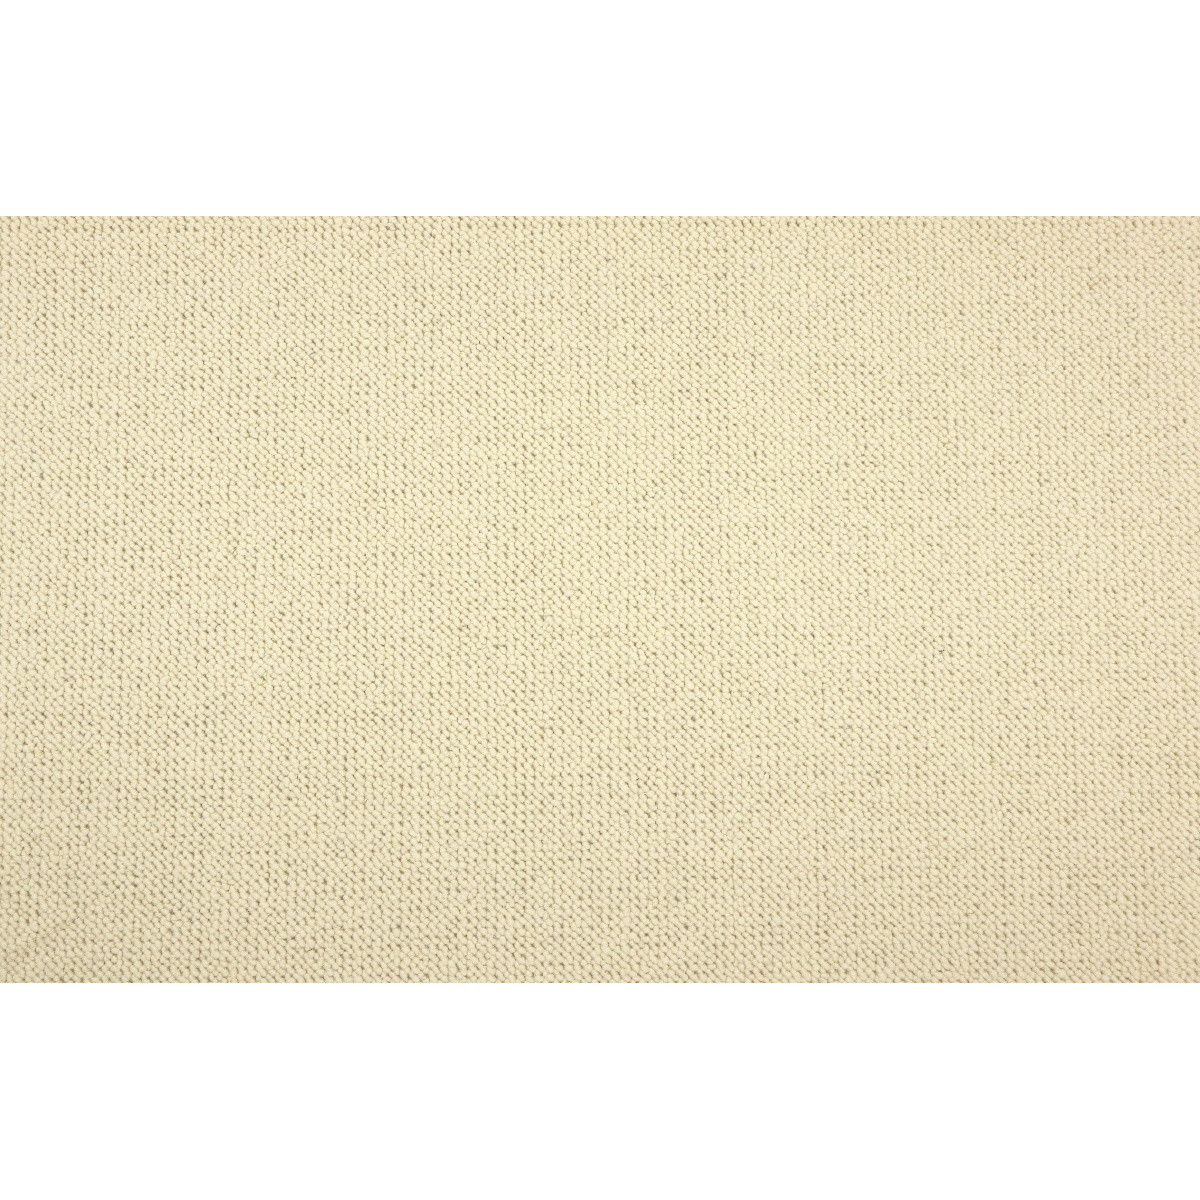 AKCE: 45x600 cm Metrážový koberec Alfawool 86 bílý